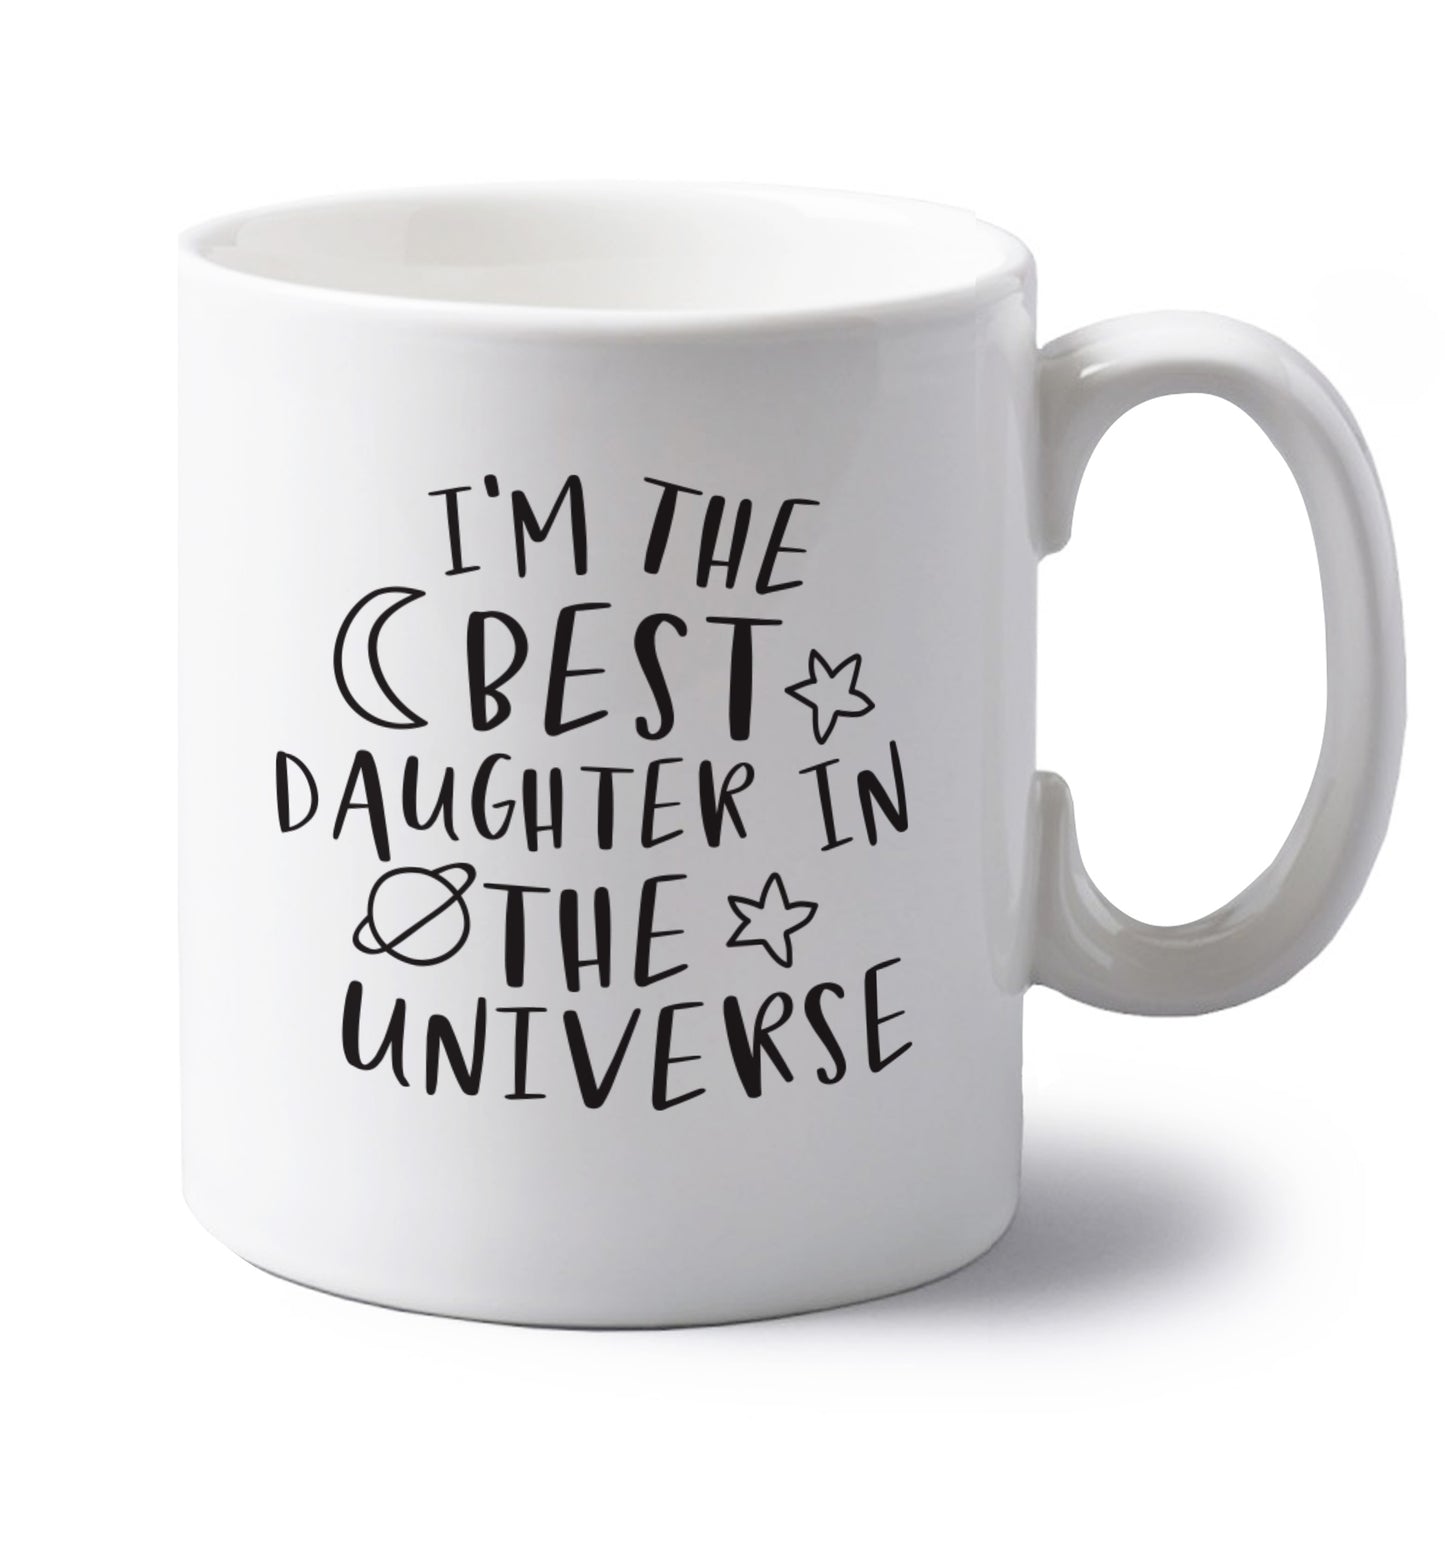 I'm the best daughter in the universe left handed white ceramic mug 